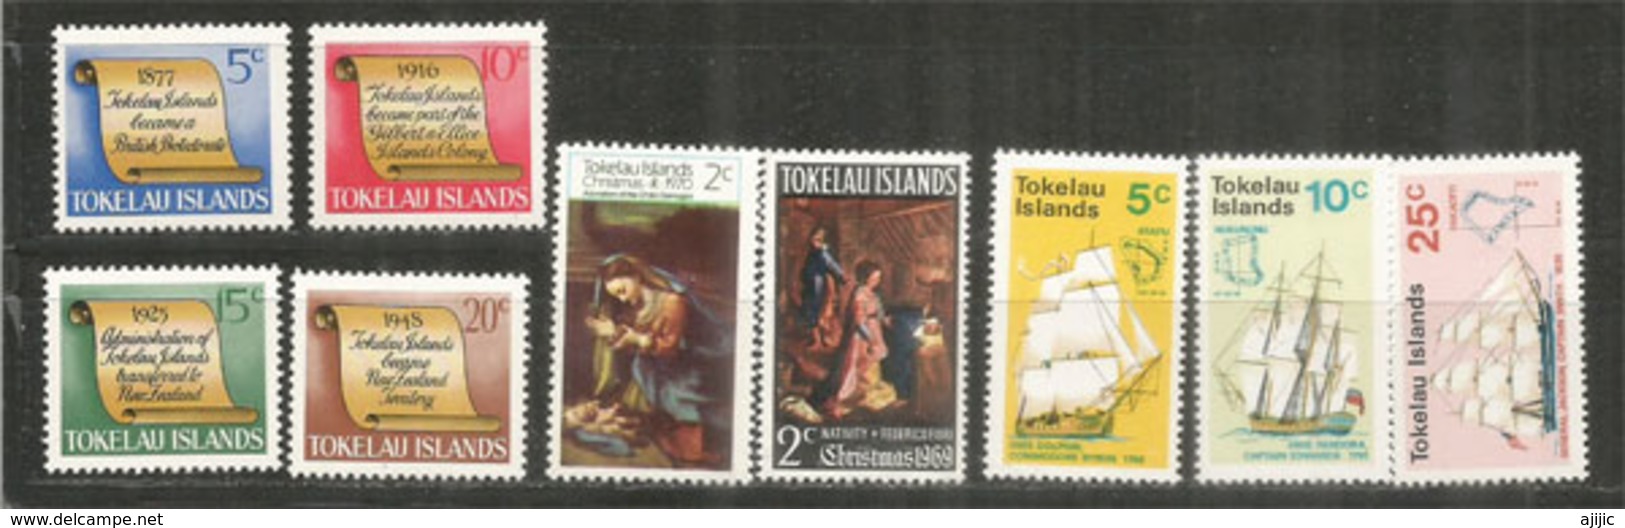 Annees Completes 1969 & 1970 Des Iles Tokelau. 9 Timbres Neufs **  Cote 20,00 Euro (decouverte Des Iles En 1765) - Tokelau